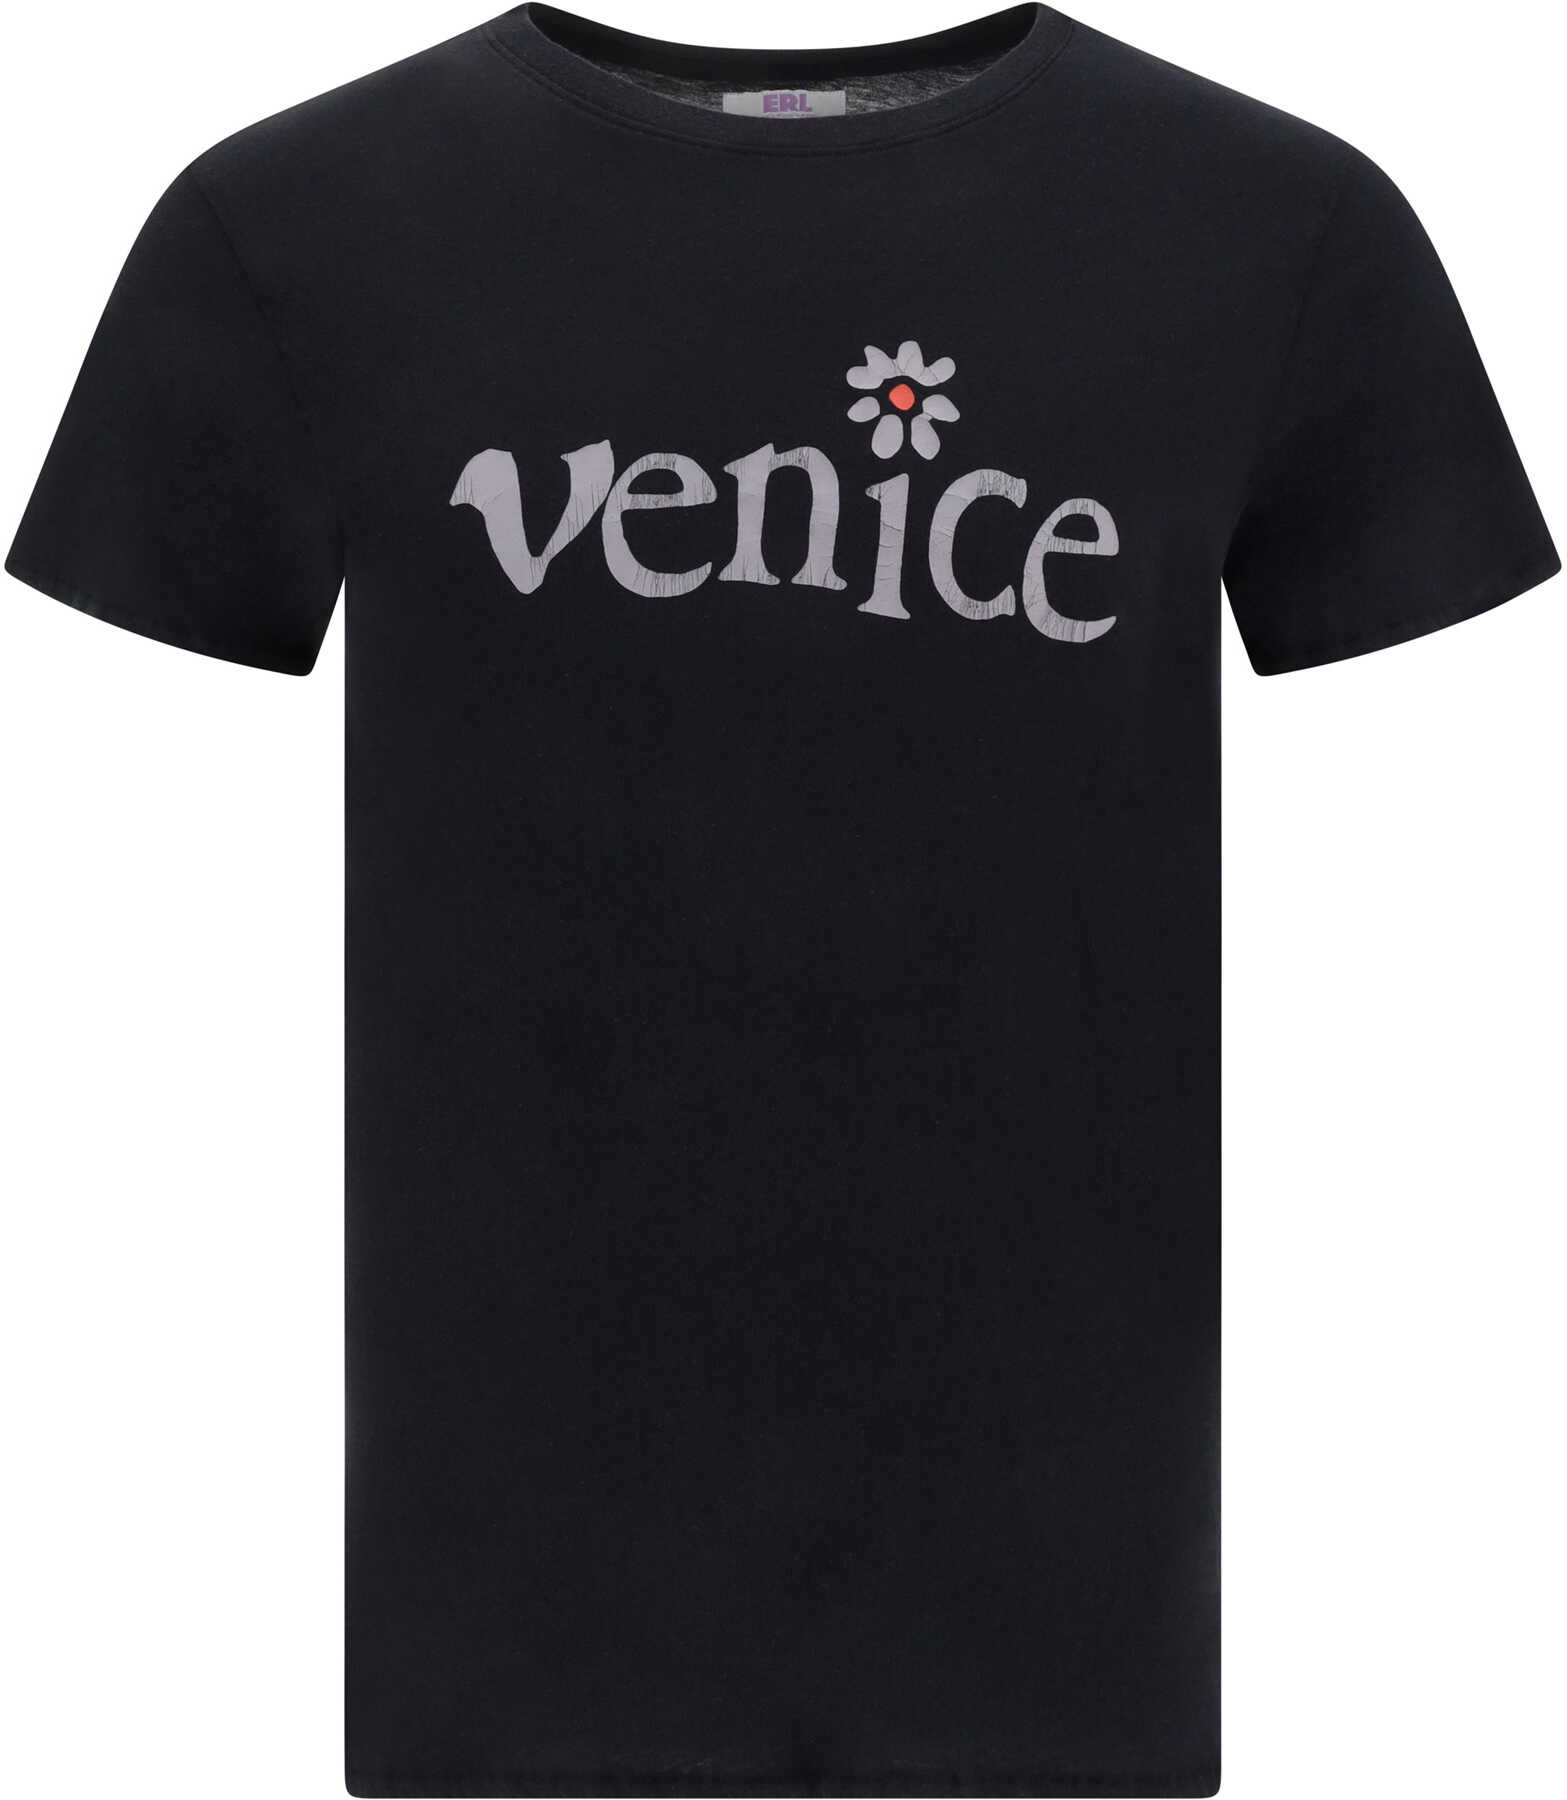 ERL Venice T-Shirt BLACK